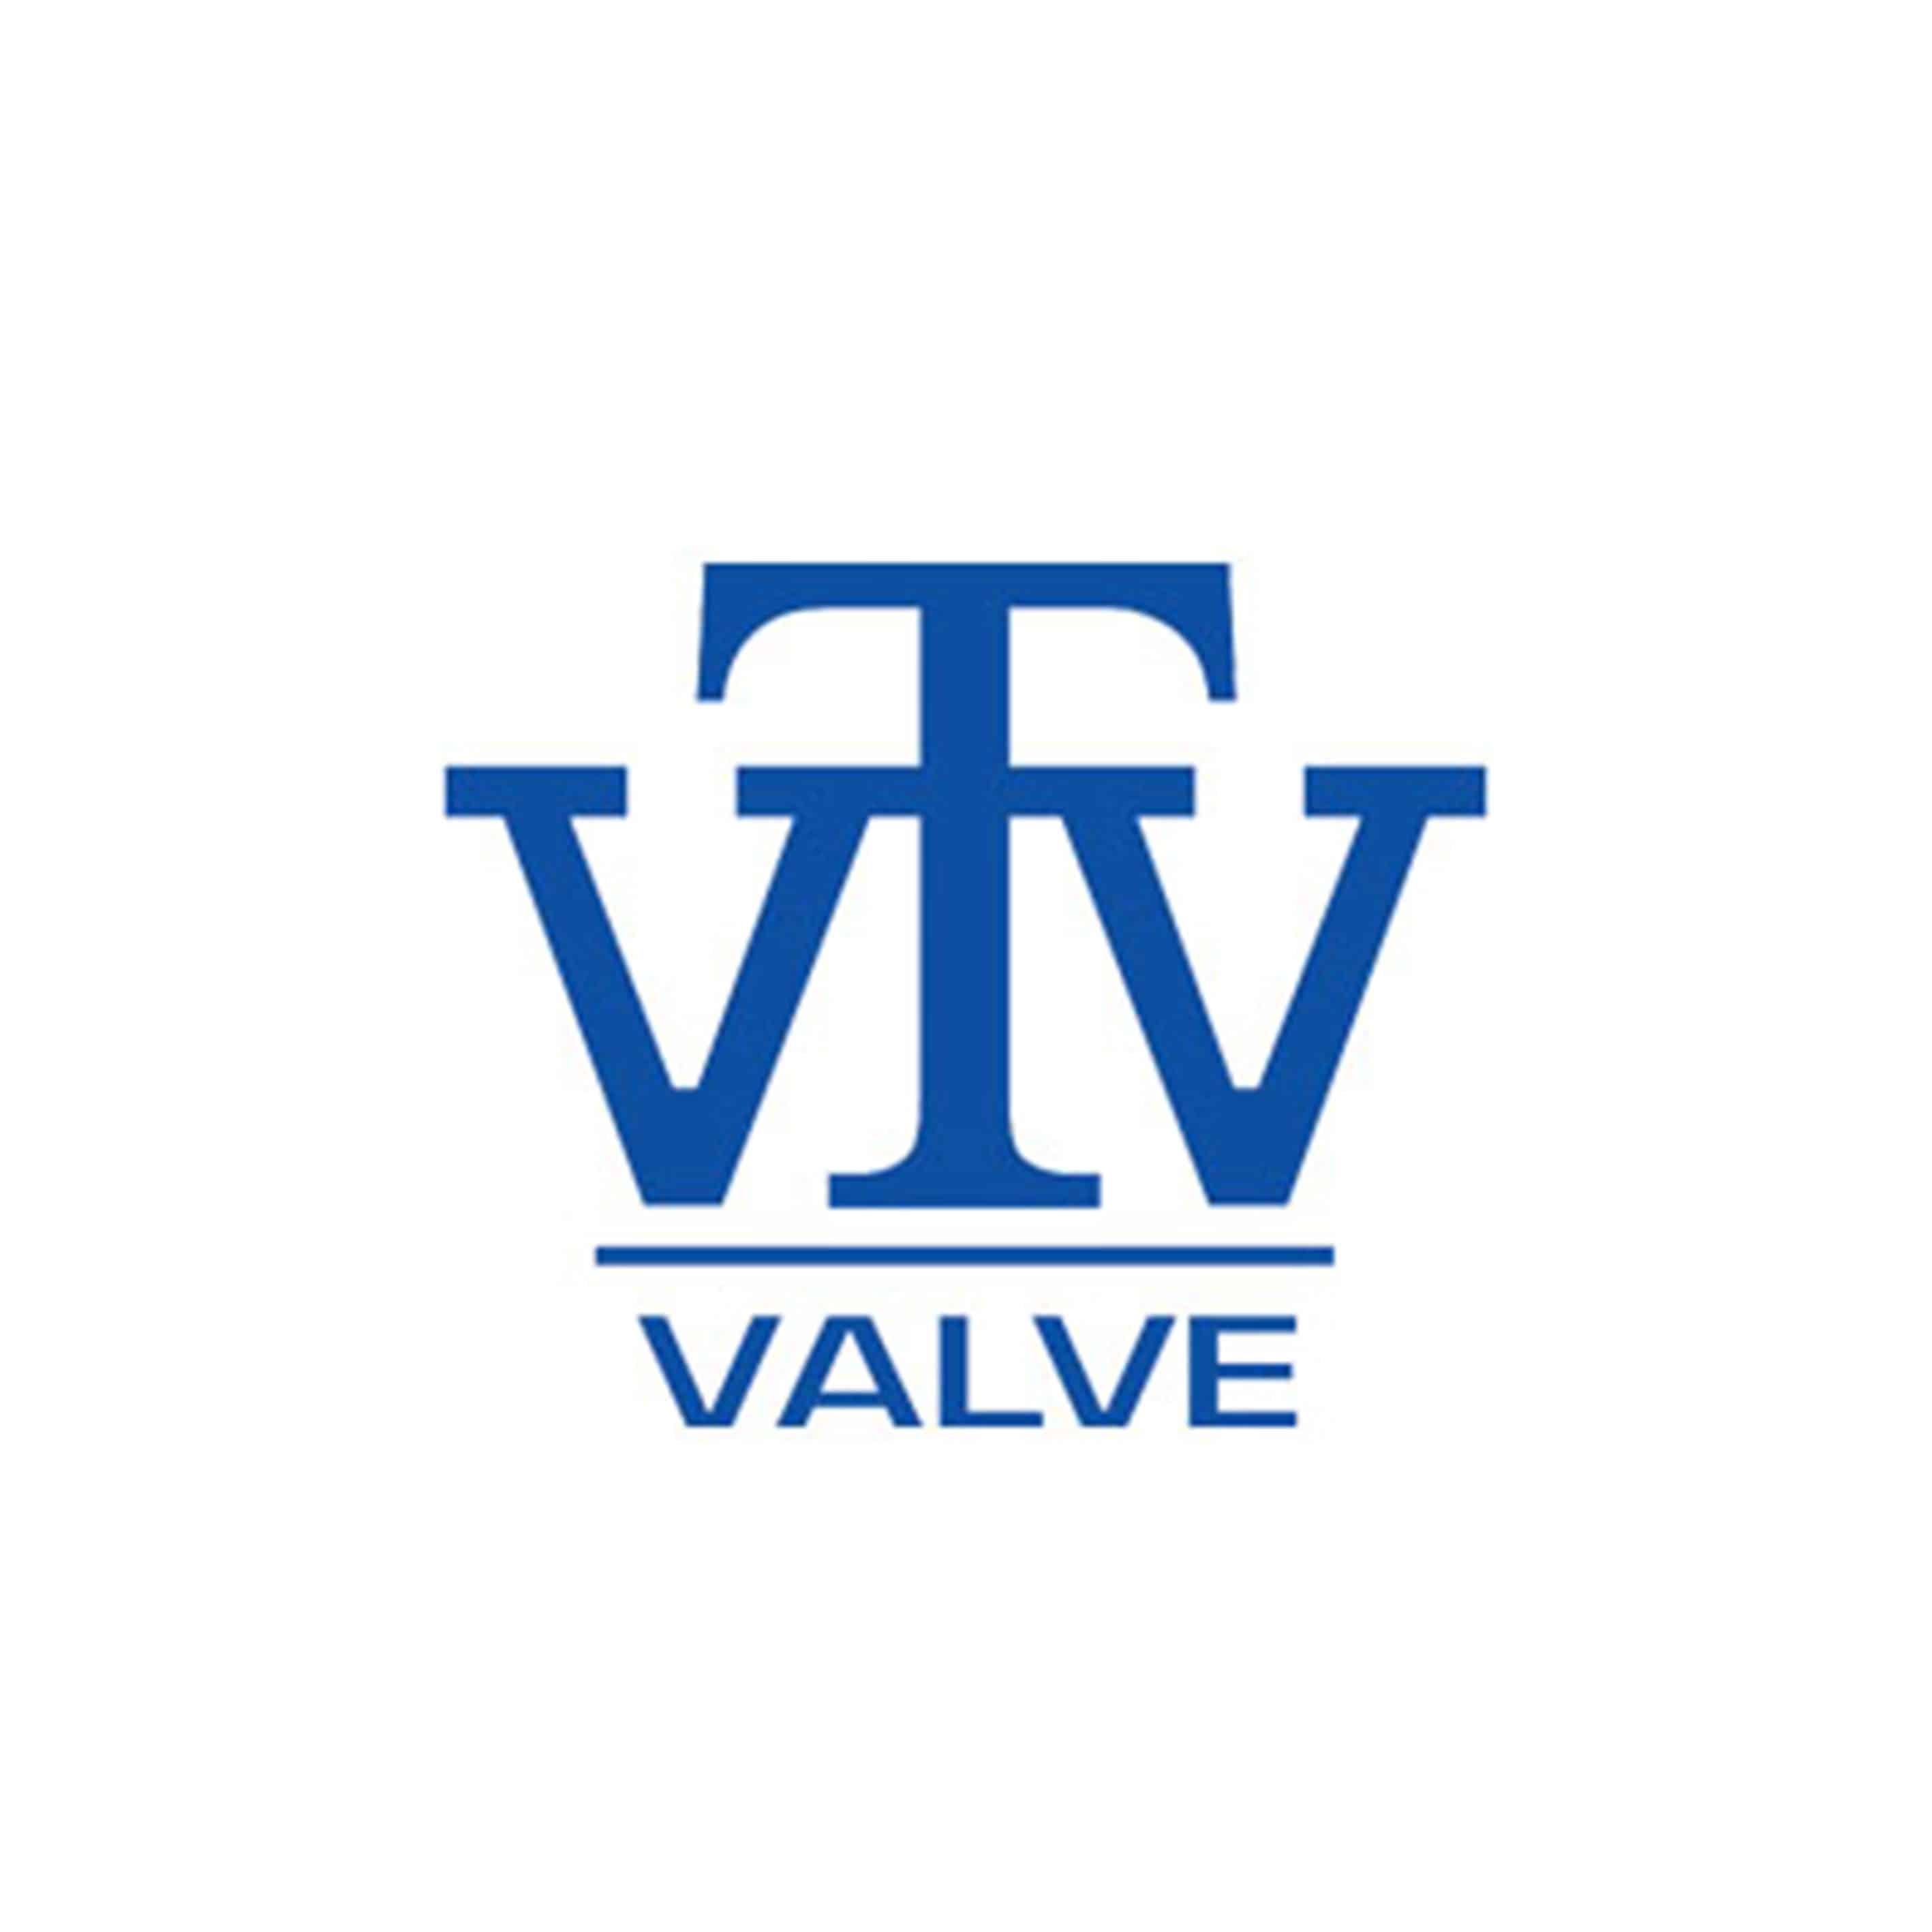 VTV Valve Rising Stem Gate Valve ANSI Standard - GV 202